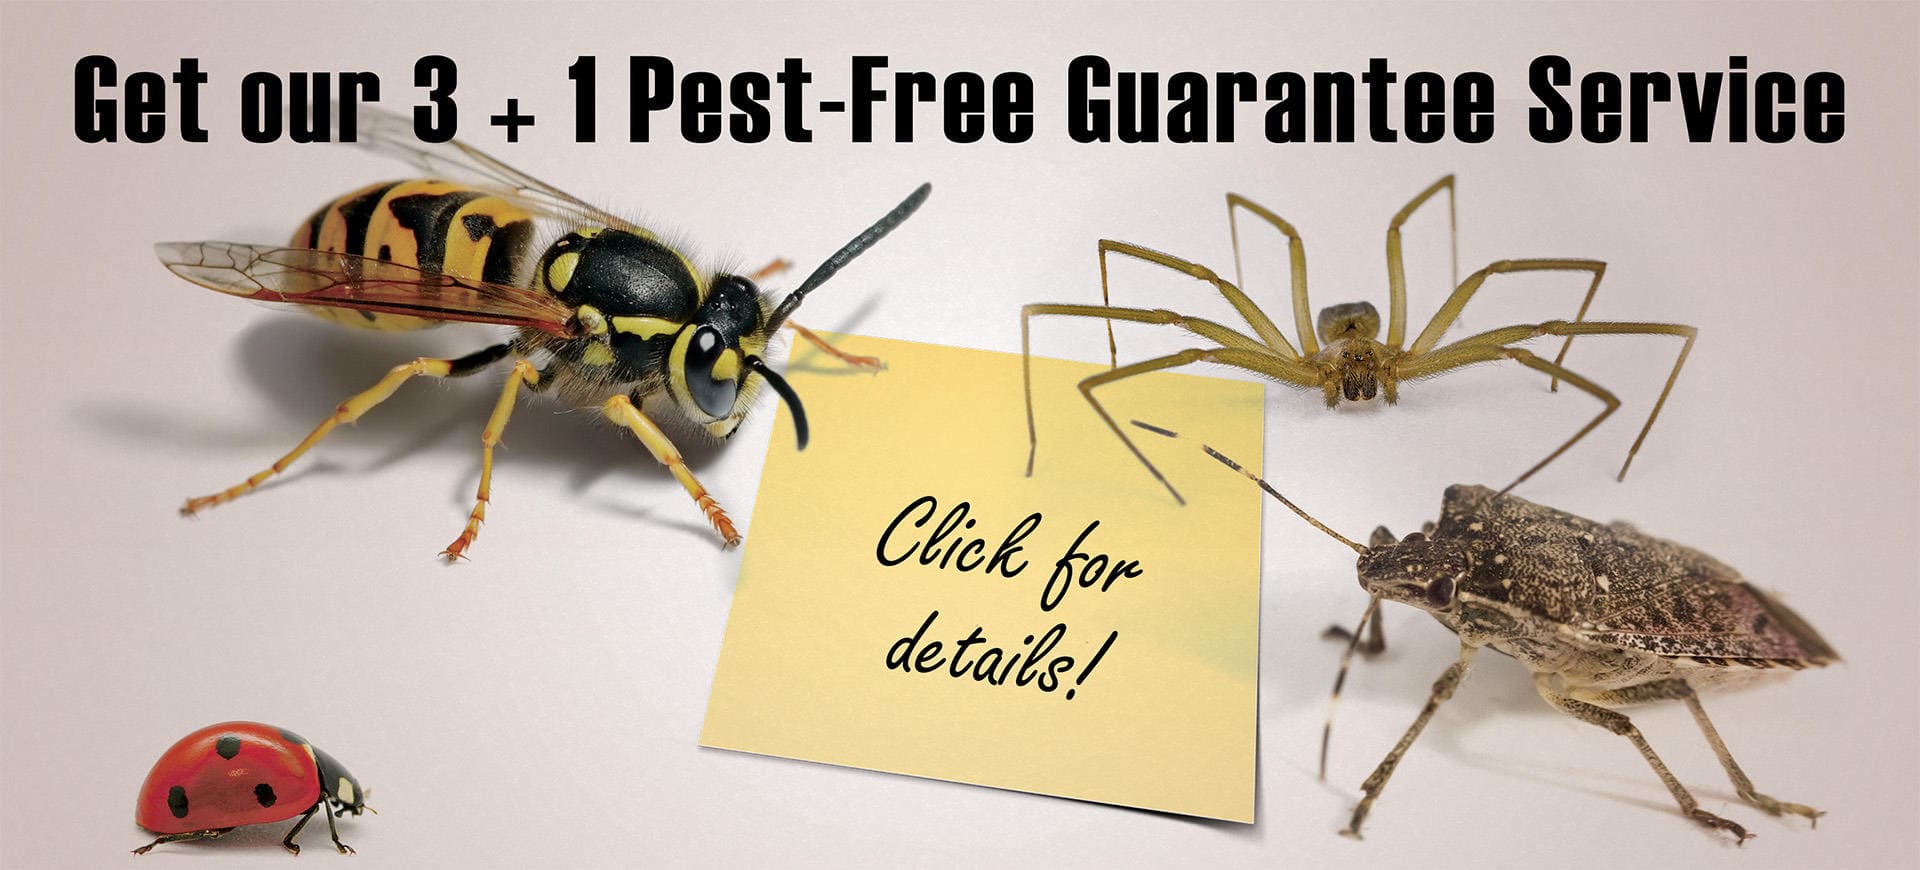 pest free guarantee service lenawee county michigan